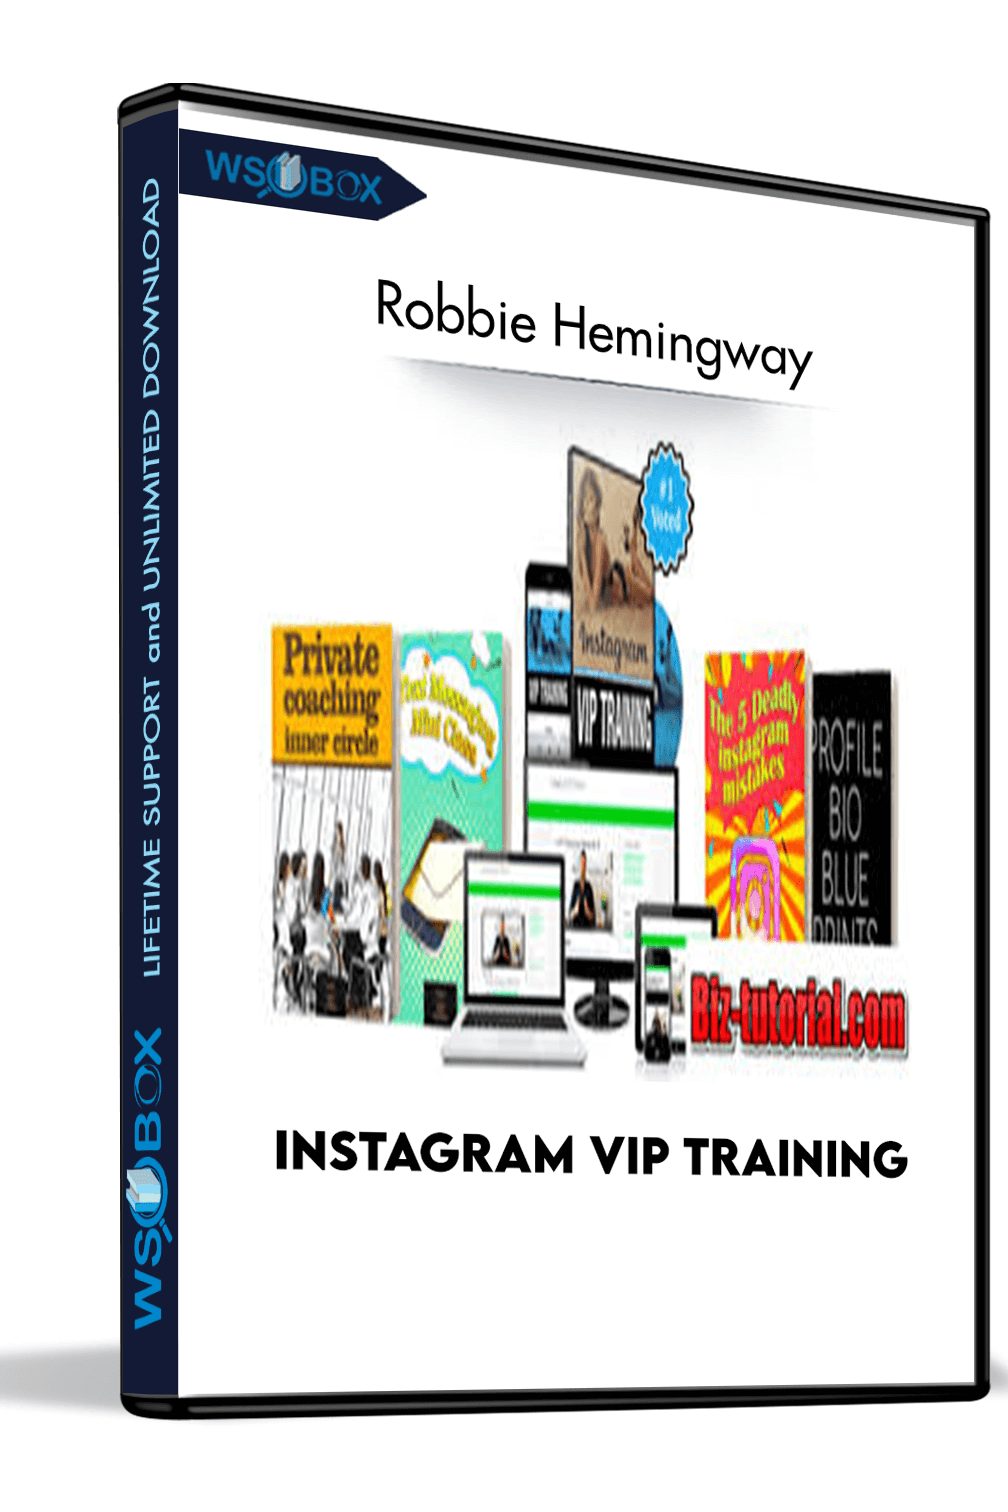 instagram-vip-training-robbie-hemingway